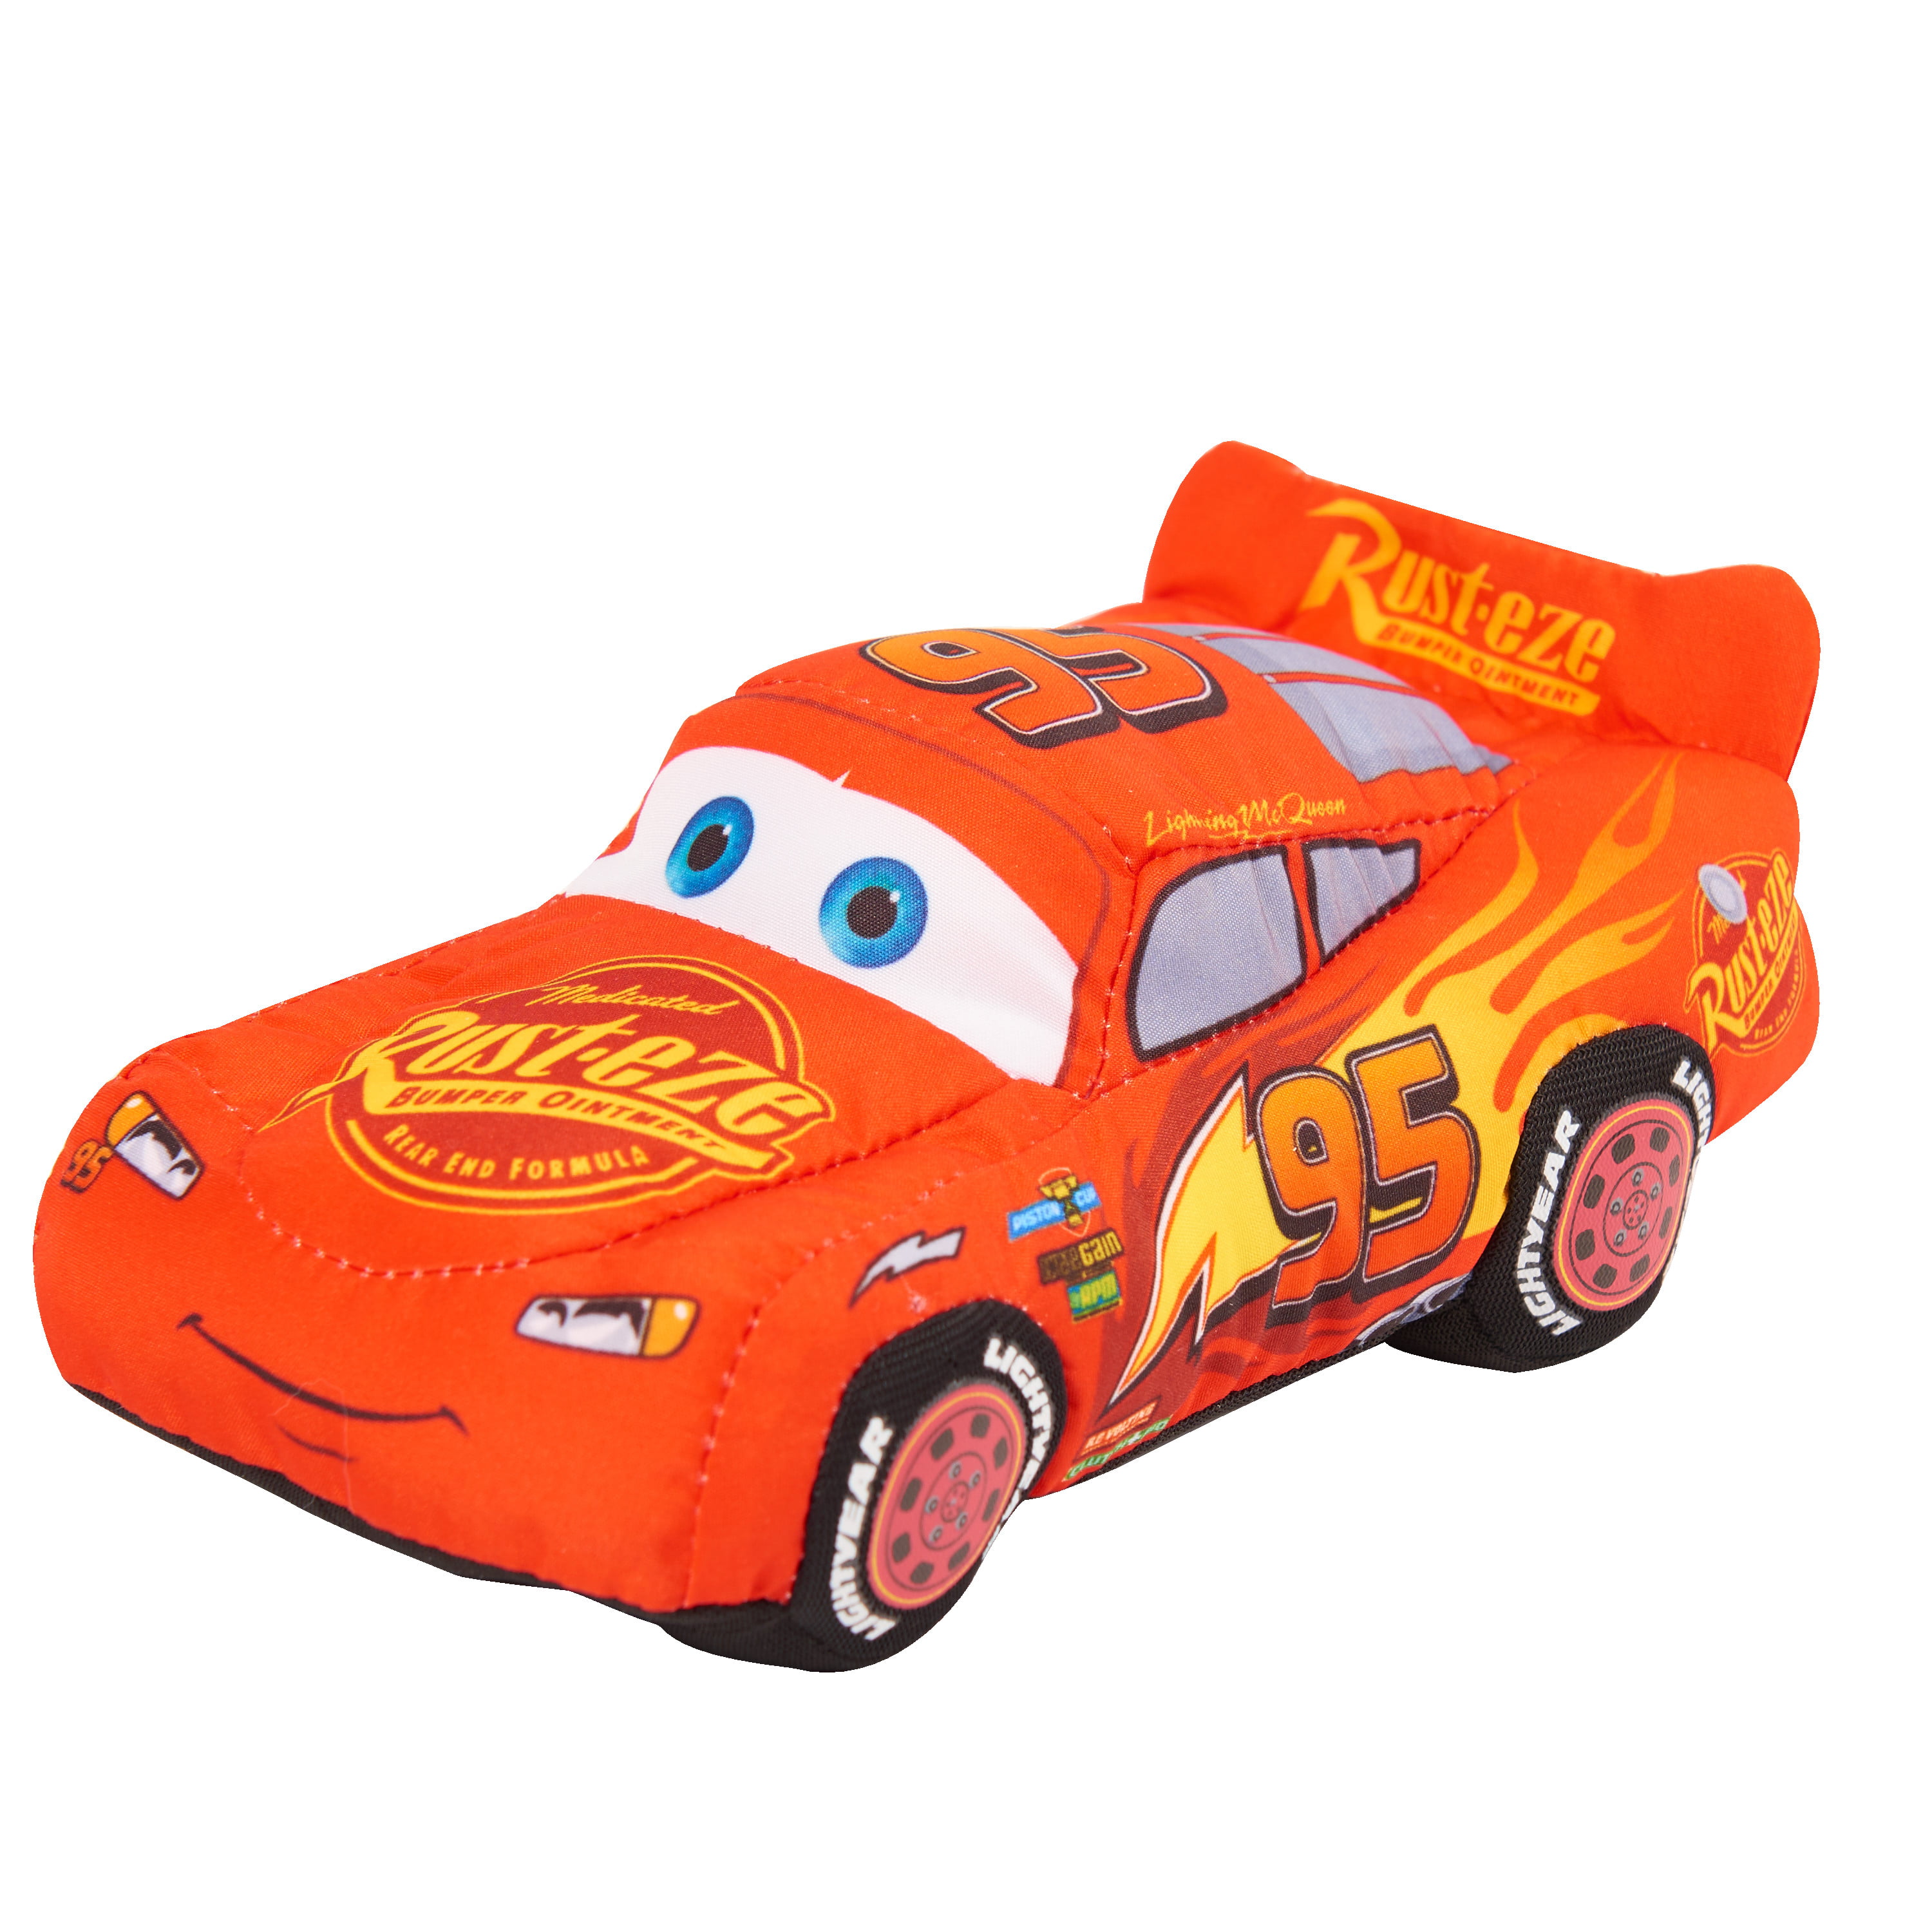 Lightning McQueen Crash & Repair! Disney Cars 3 Toys Video for Kids   Hello! I am Ladybird TV(tentoumusiterebi).This story is a story that  Lightning McQueen meets an accident. Smokey will repair Lightning